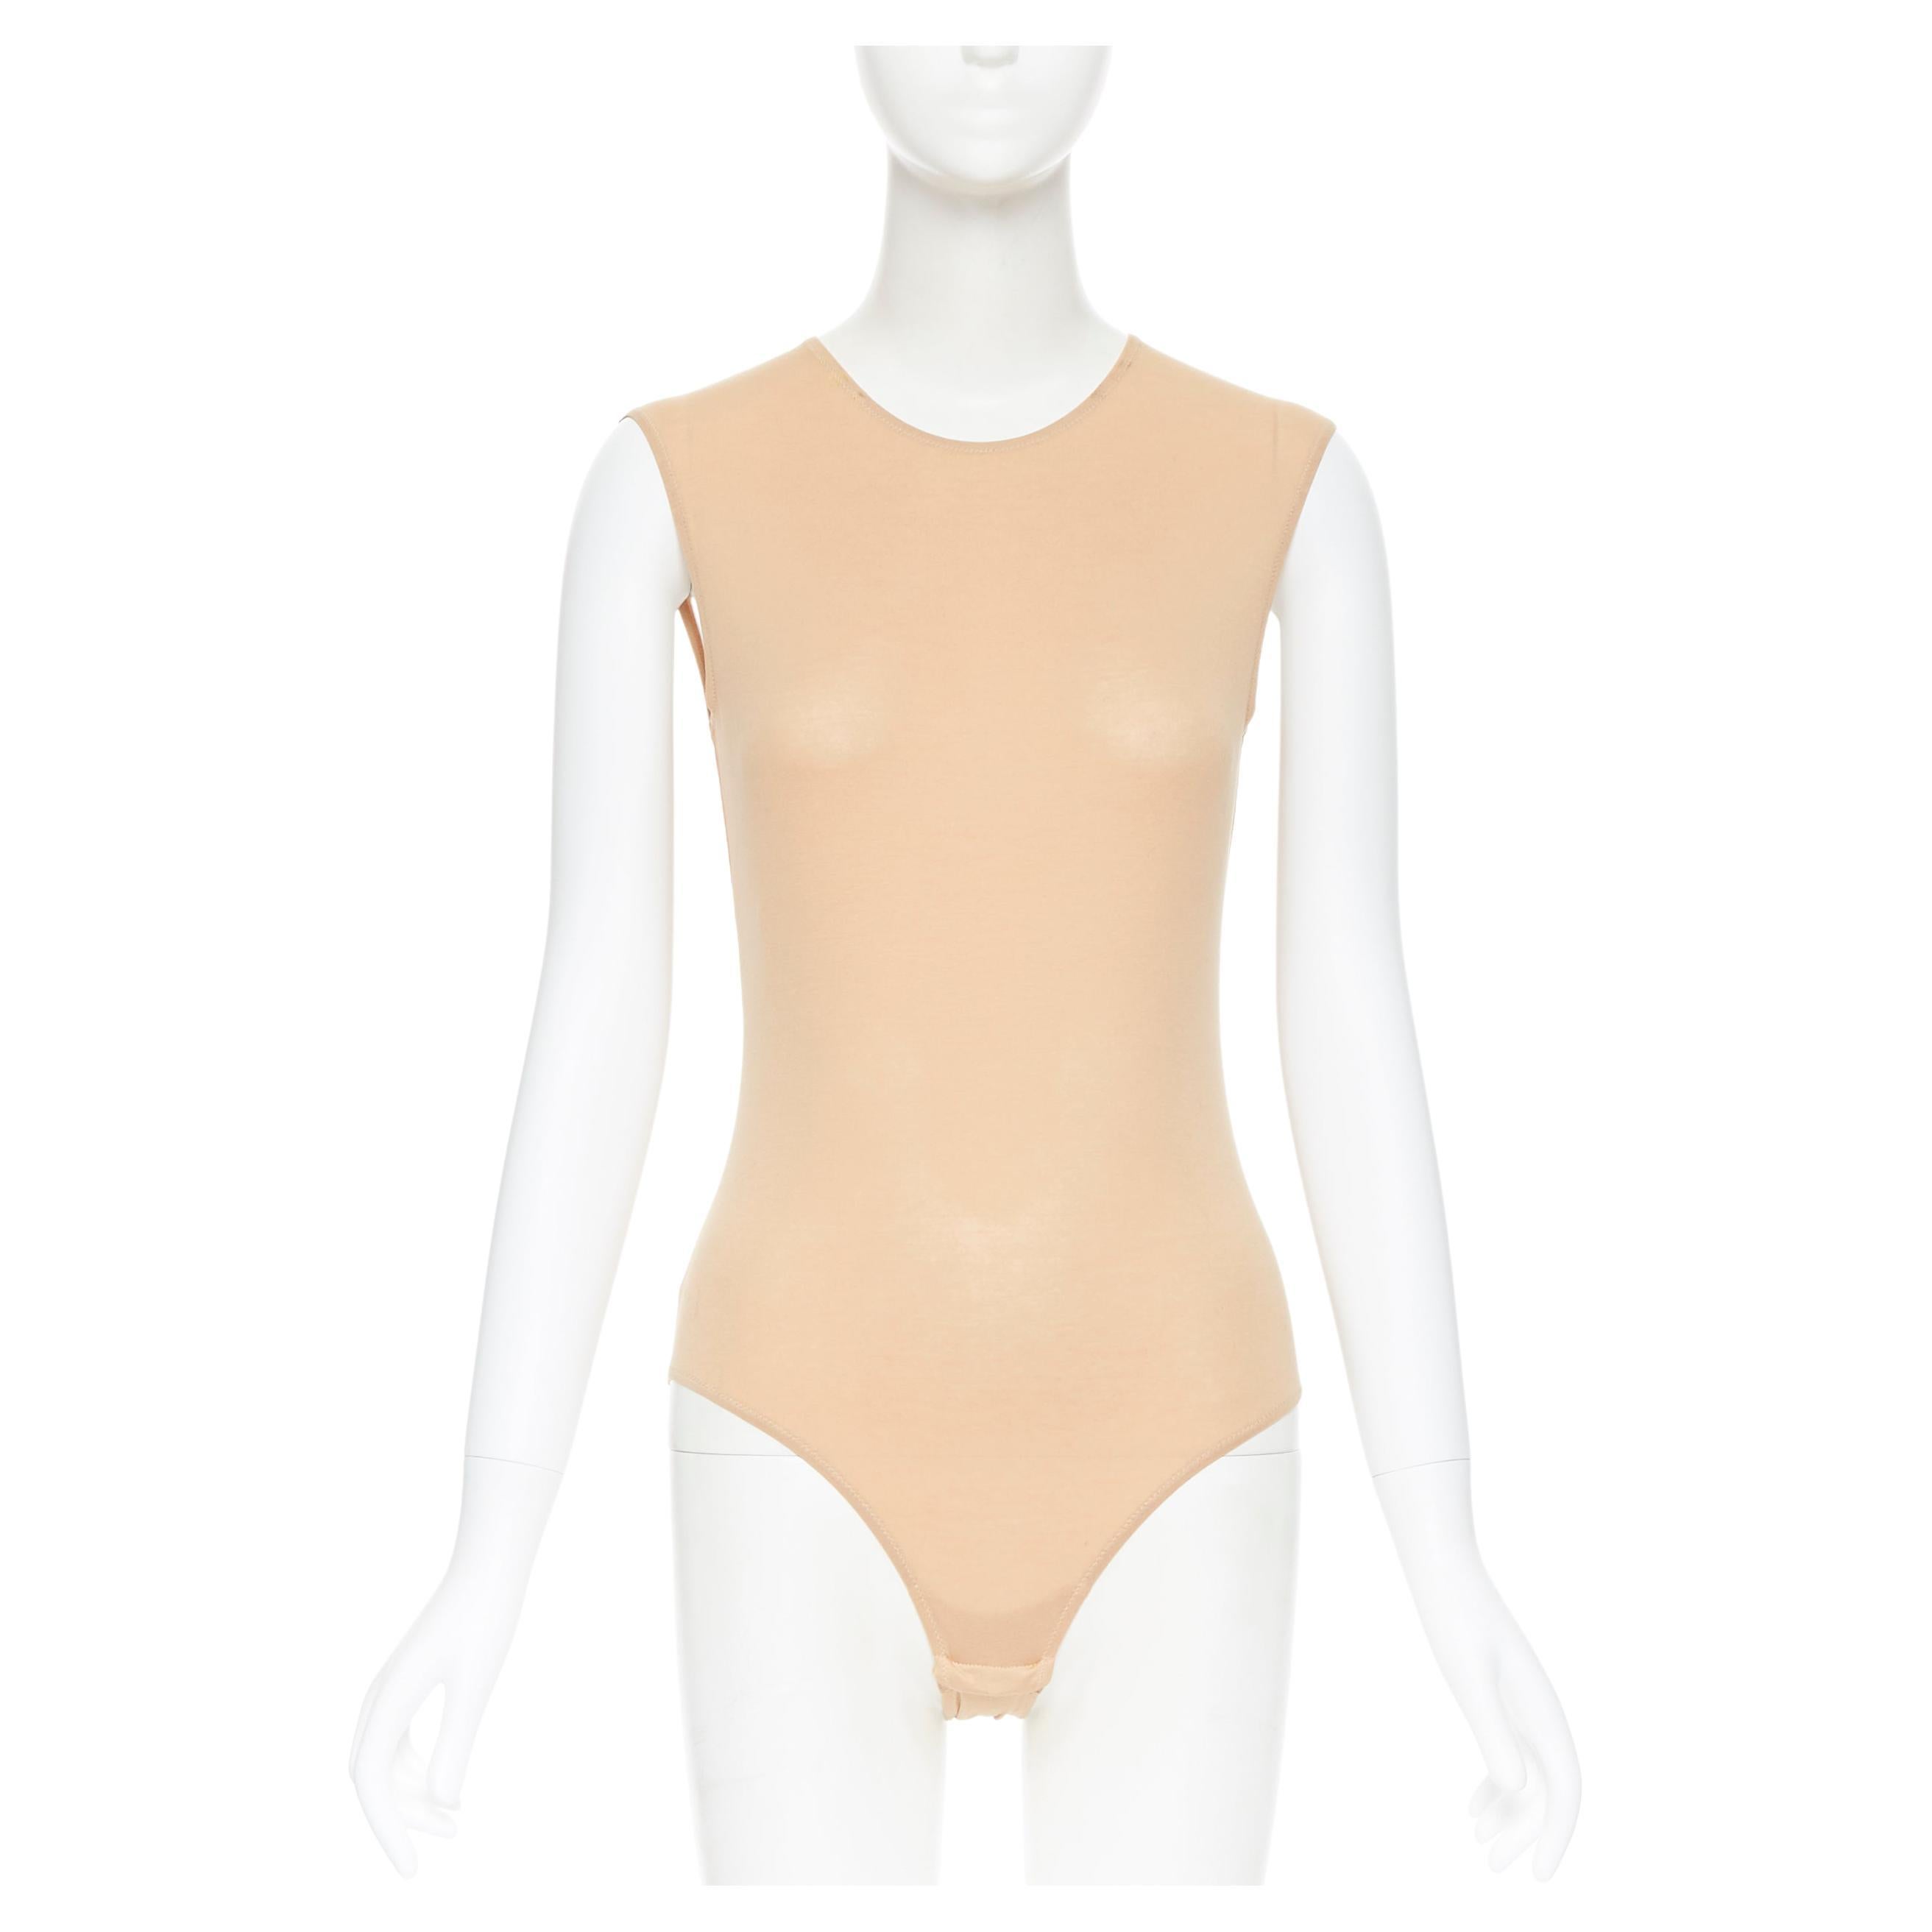 MAISON MARTIN MARGIELA beige nude sleeveless bodysuit bodice top IT42